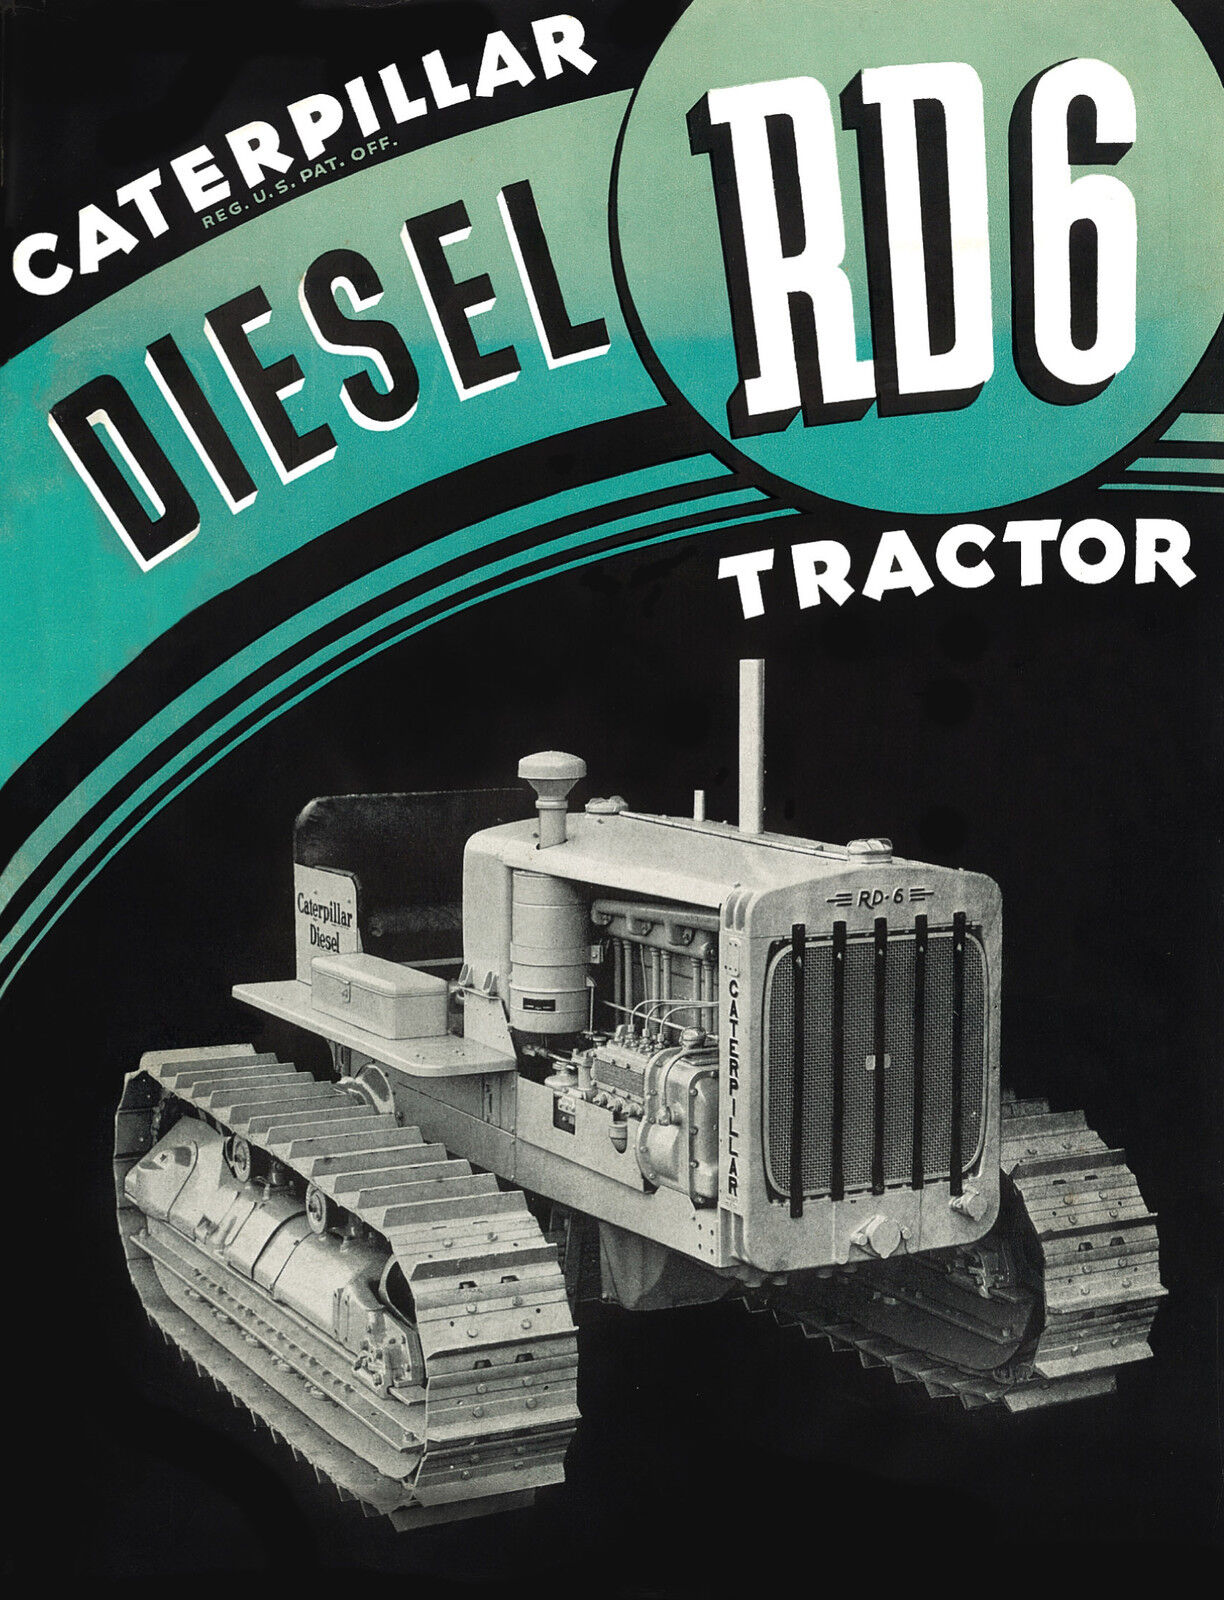 Caterpillar Diesel RD6 Sales Booklet 1930s